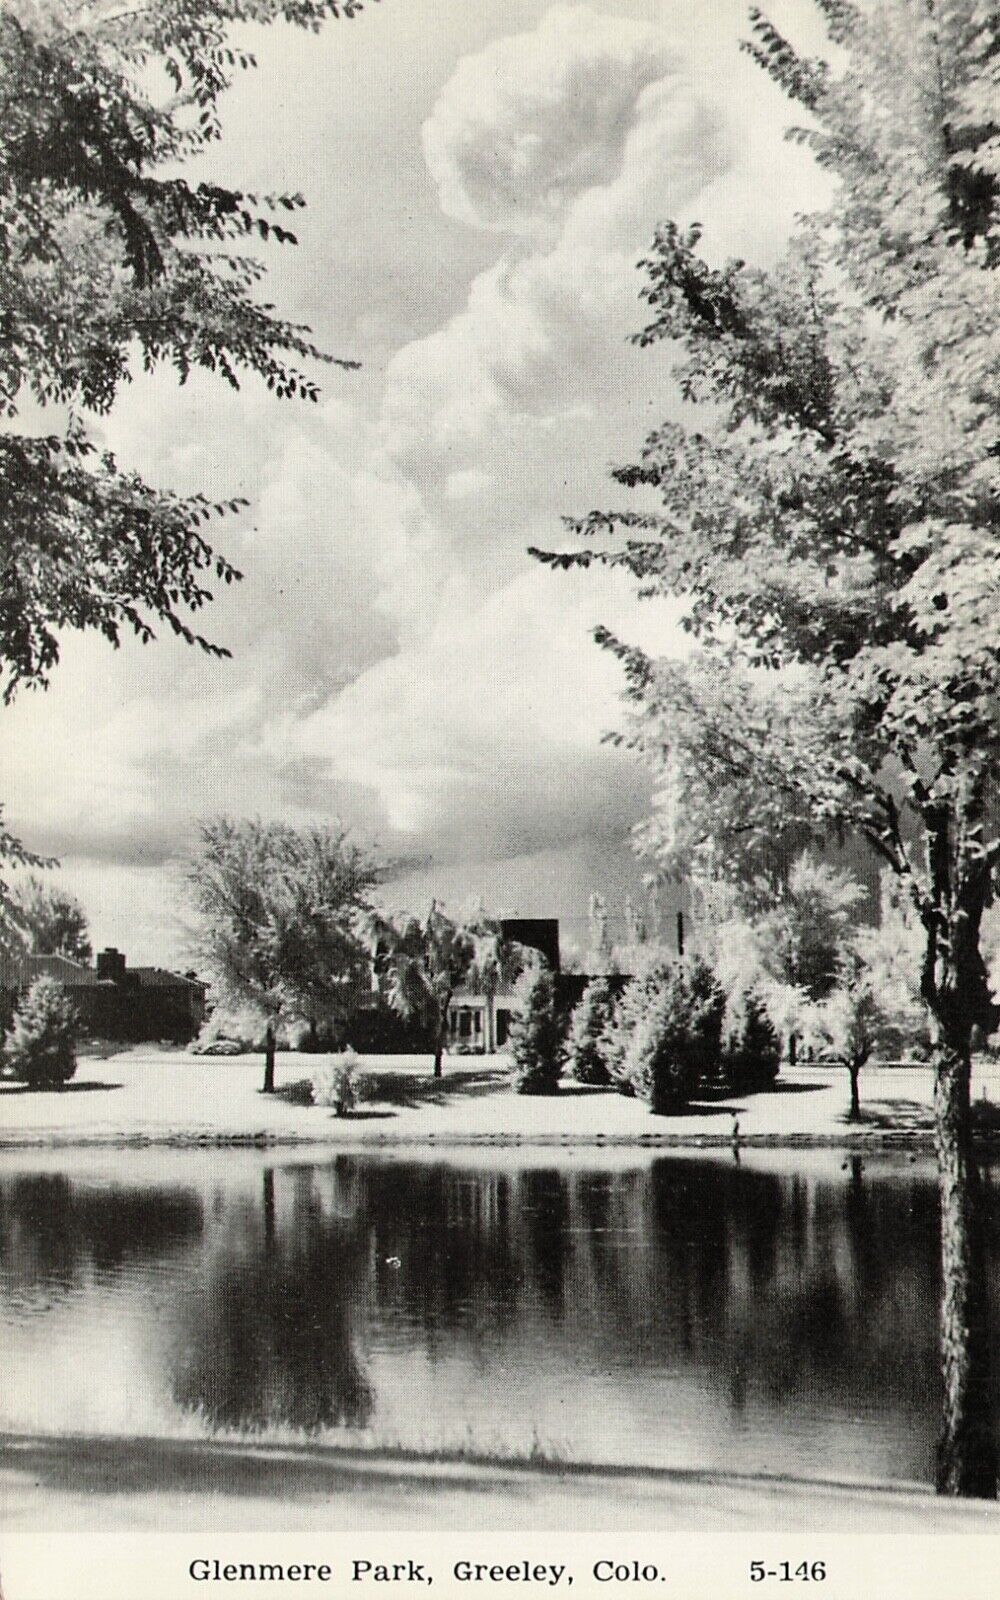 Glenmere Park Greeley Colorado 1940s Printed Photo Postcard